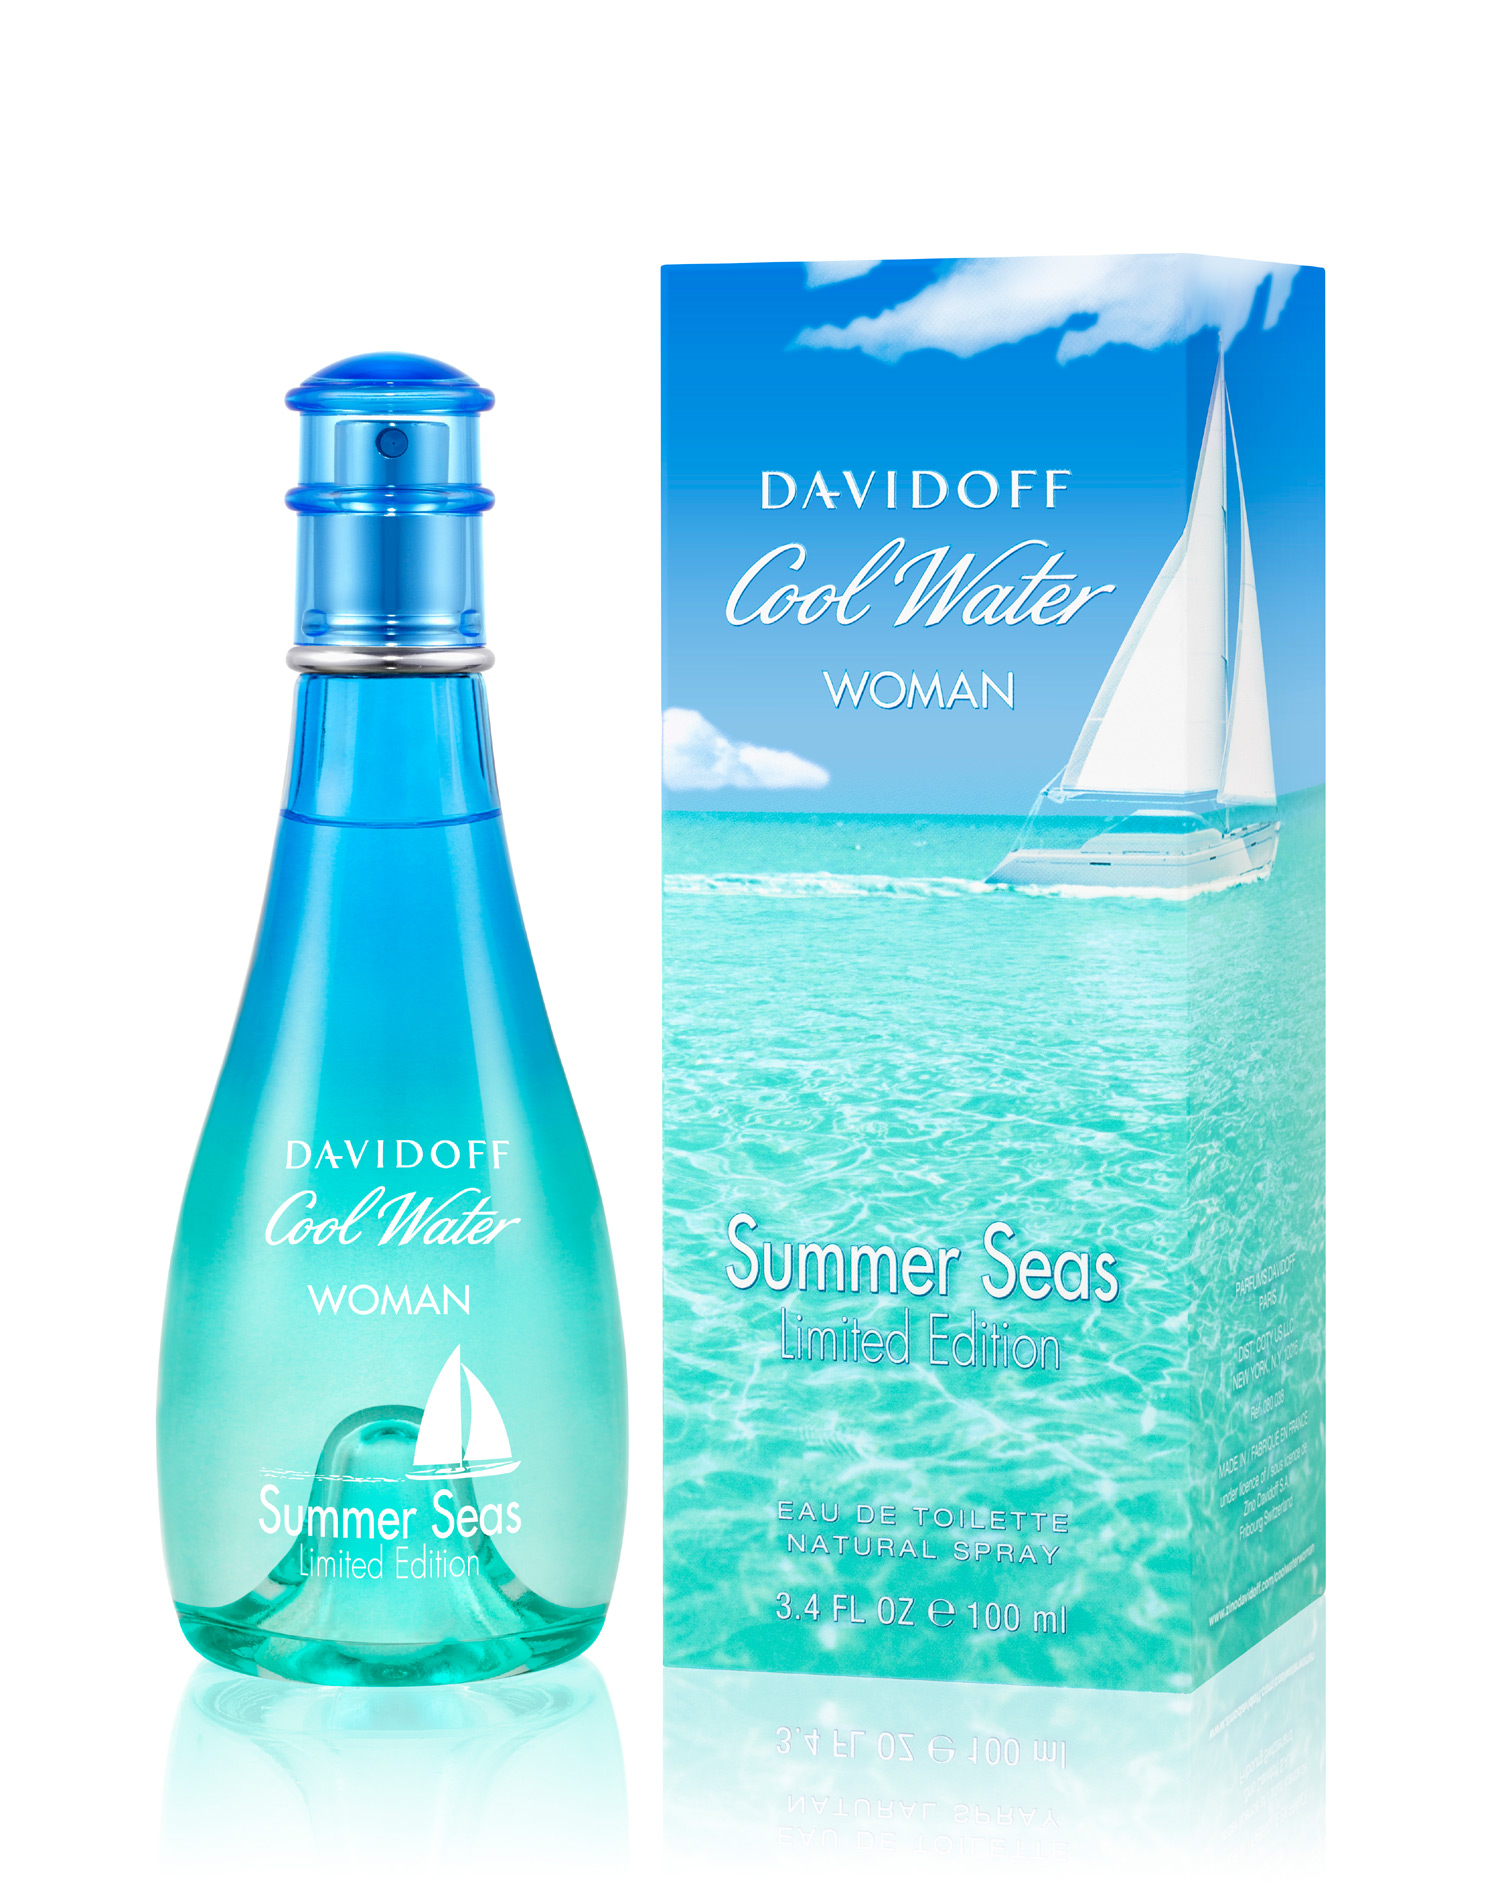 Cool Water Woman Summer Seas Davidoff عطر A Fragrance للنساء 2015